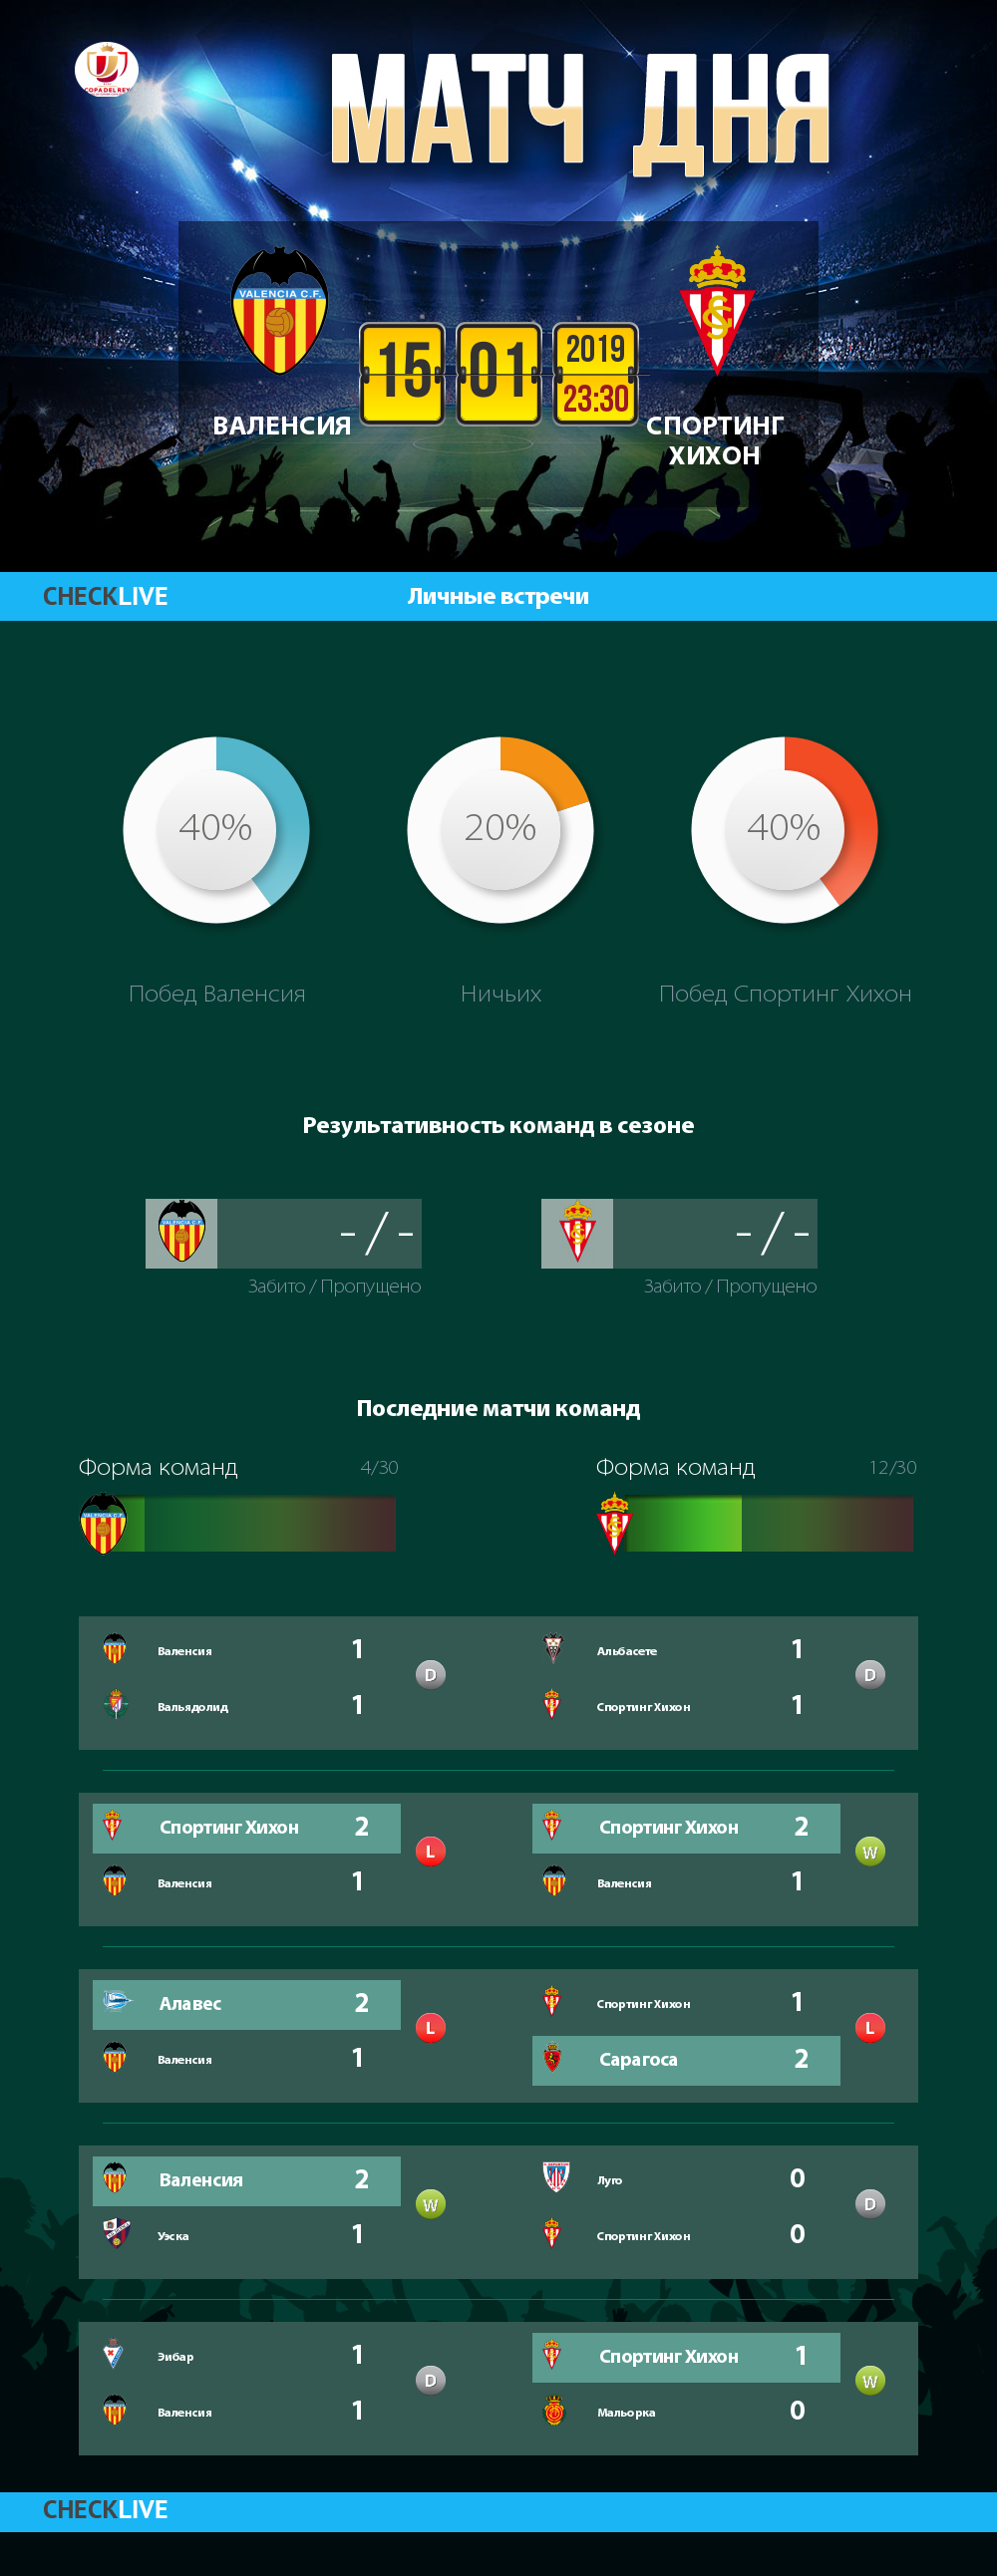 Инфографика Валенсия и Спортинг Хихон матч дня 15.01.2019